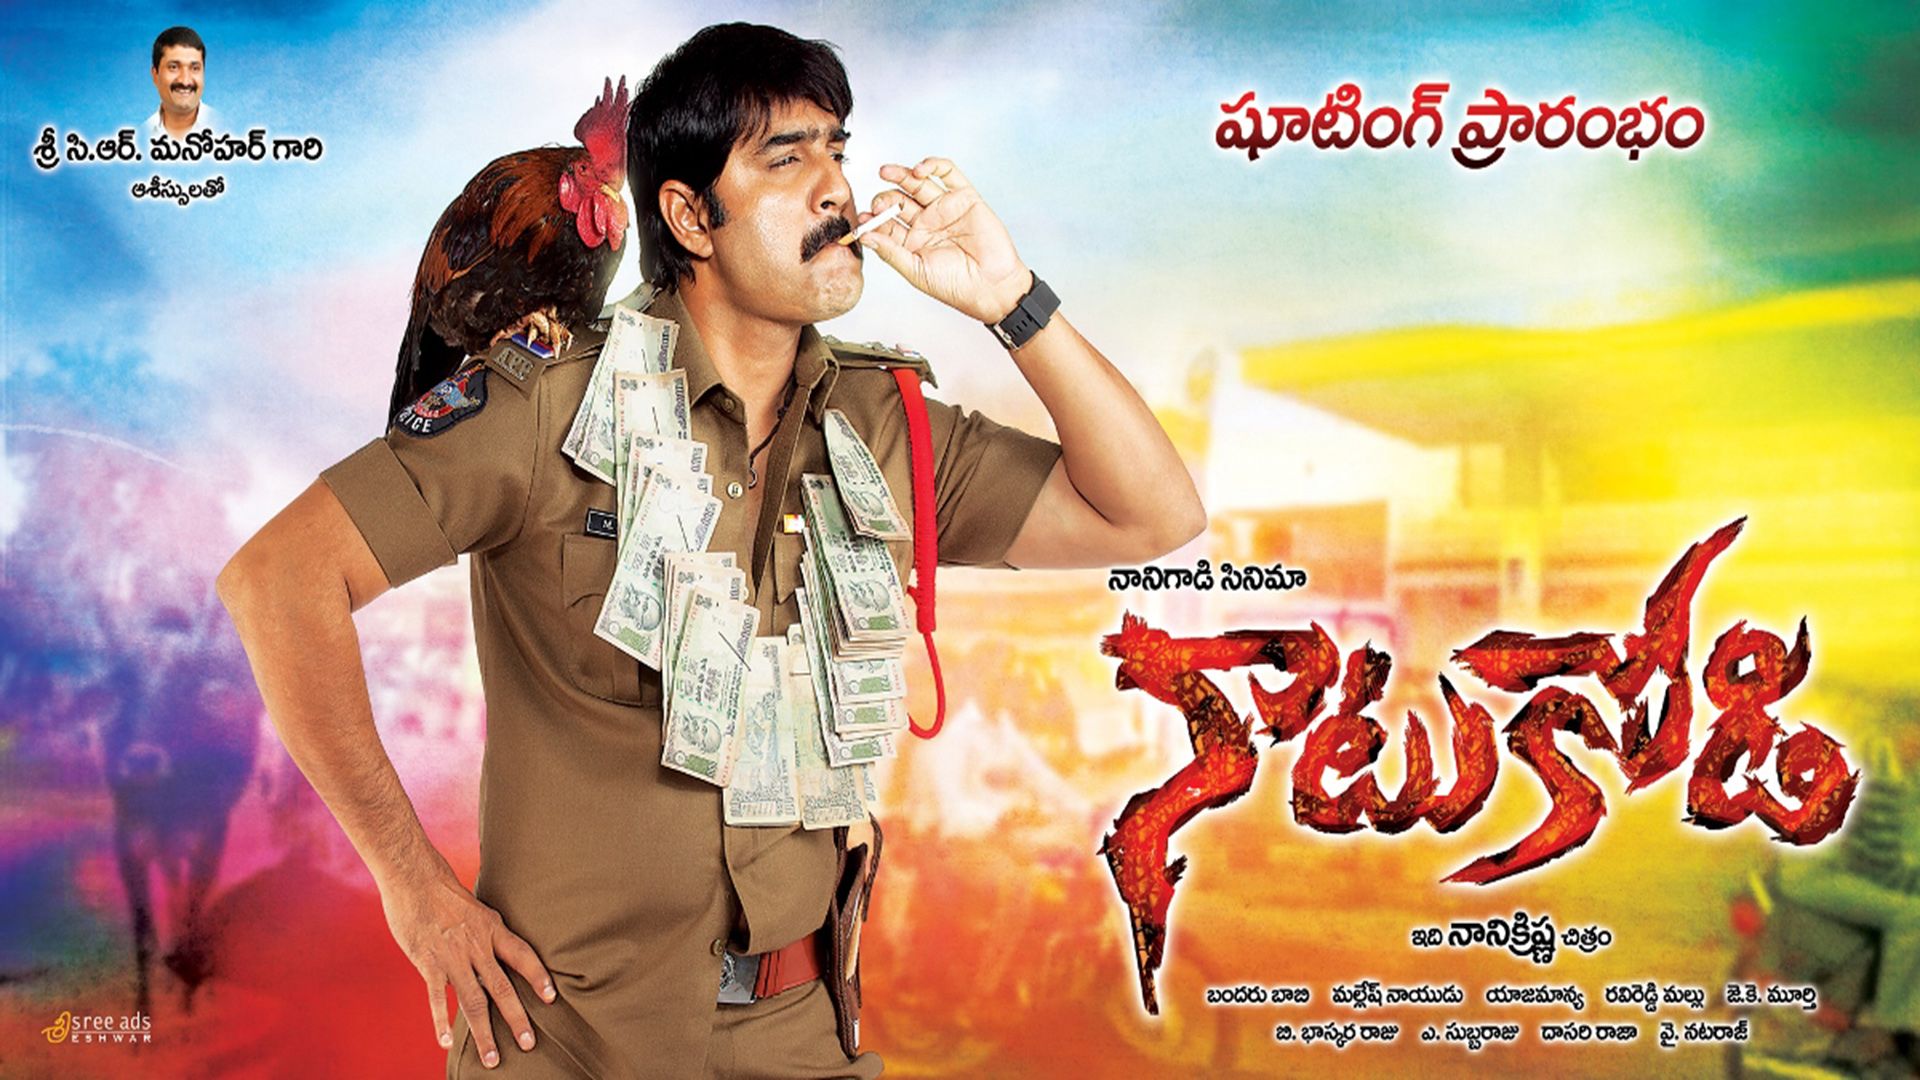 Telugu Movies Wallpaper